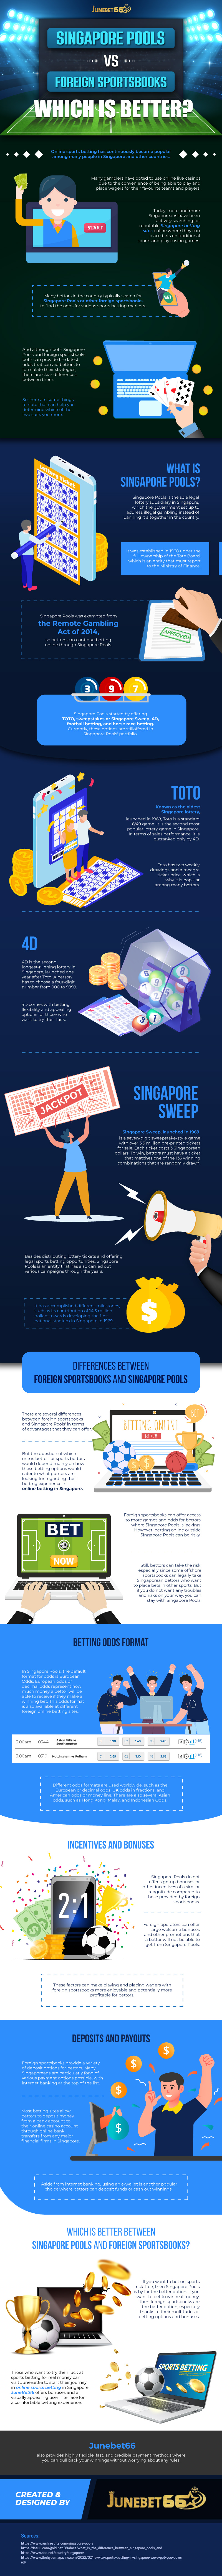 Singapore Pools vs Foreign Sportsbooks junbet66